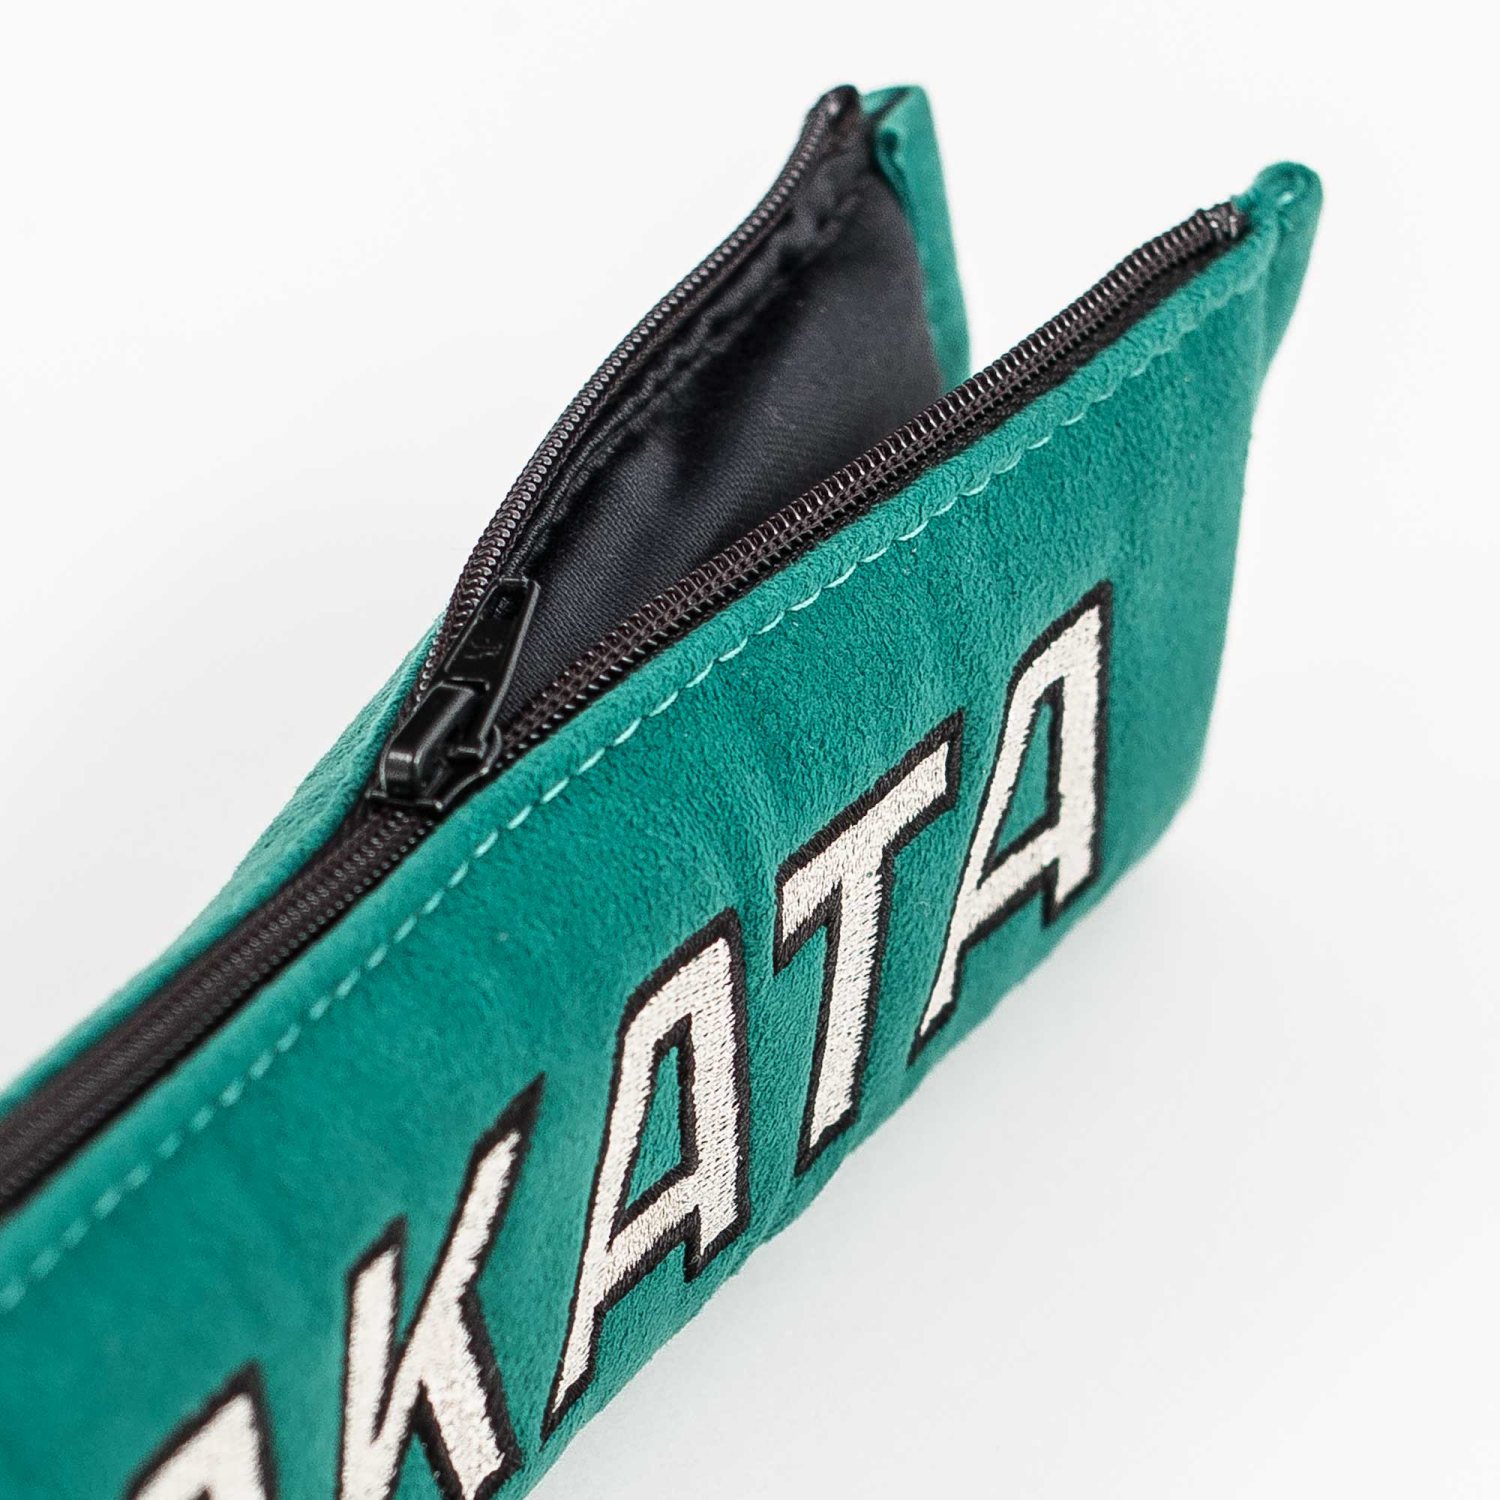 Fabric details of takata comfort seat belt shoulder pads in green.